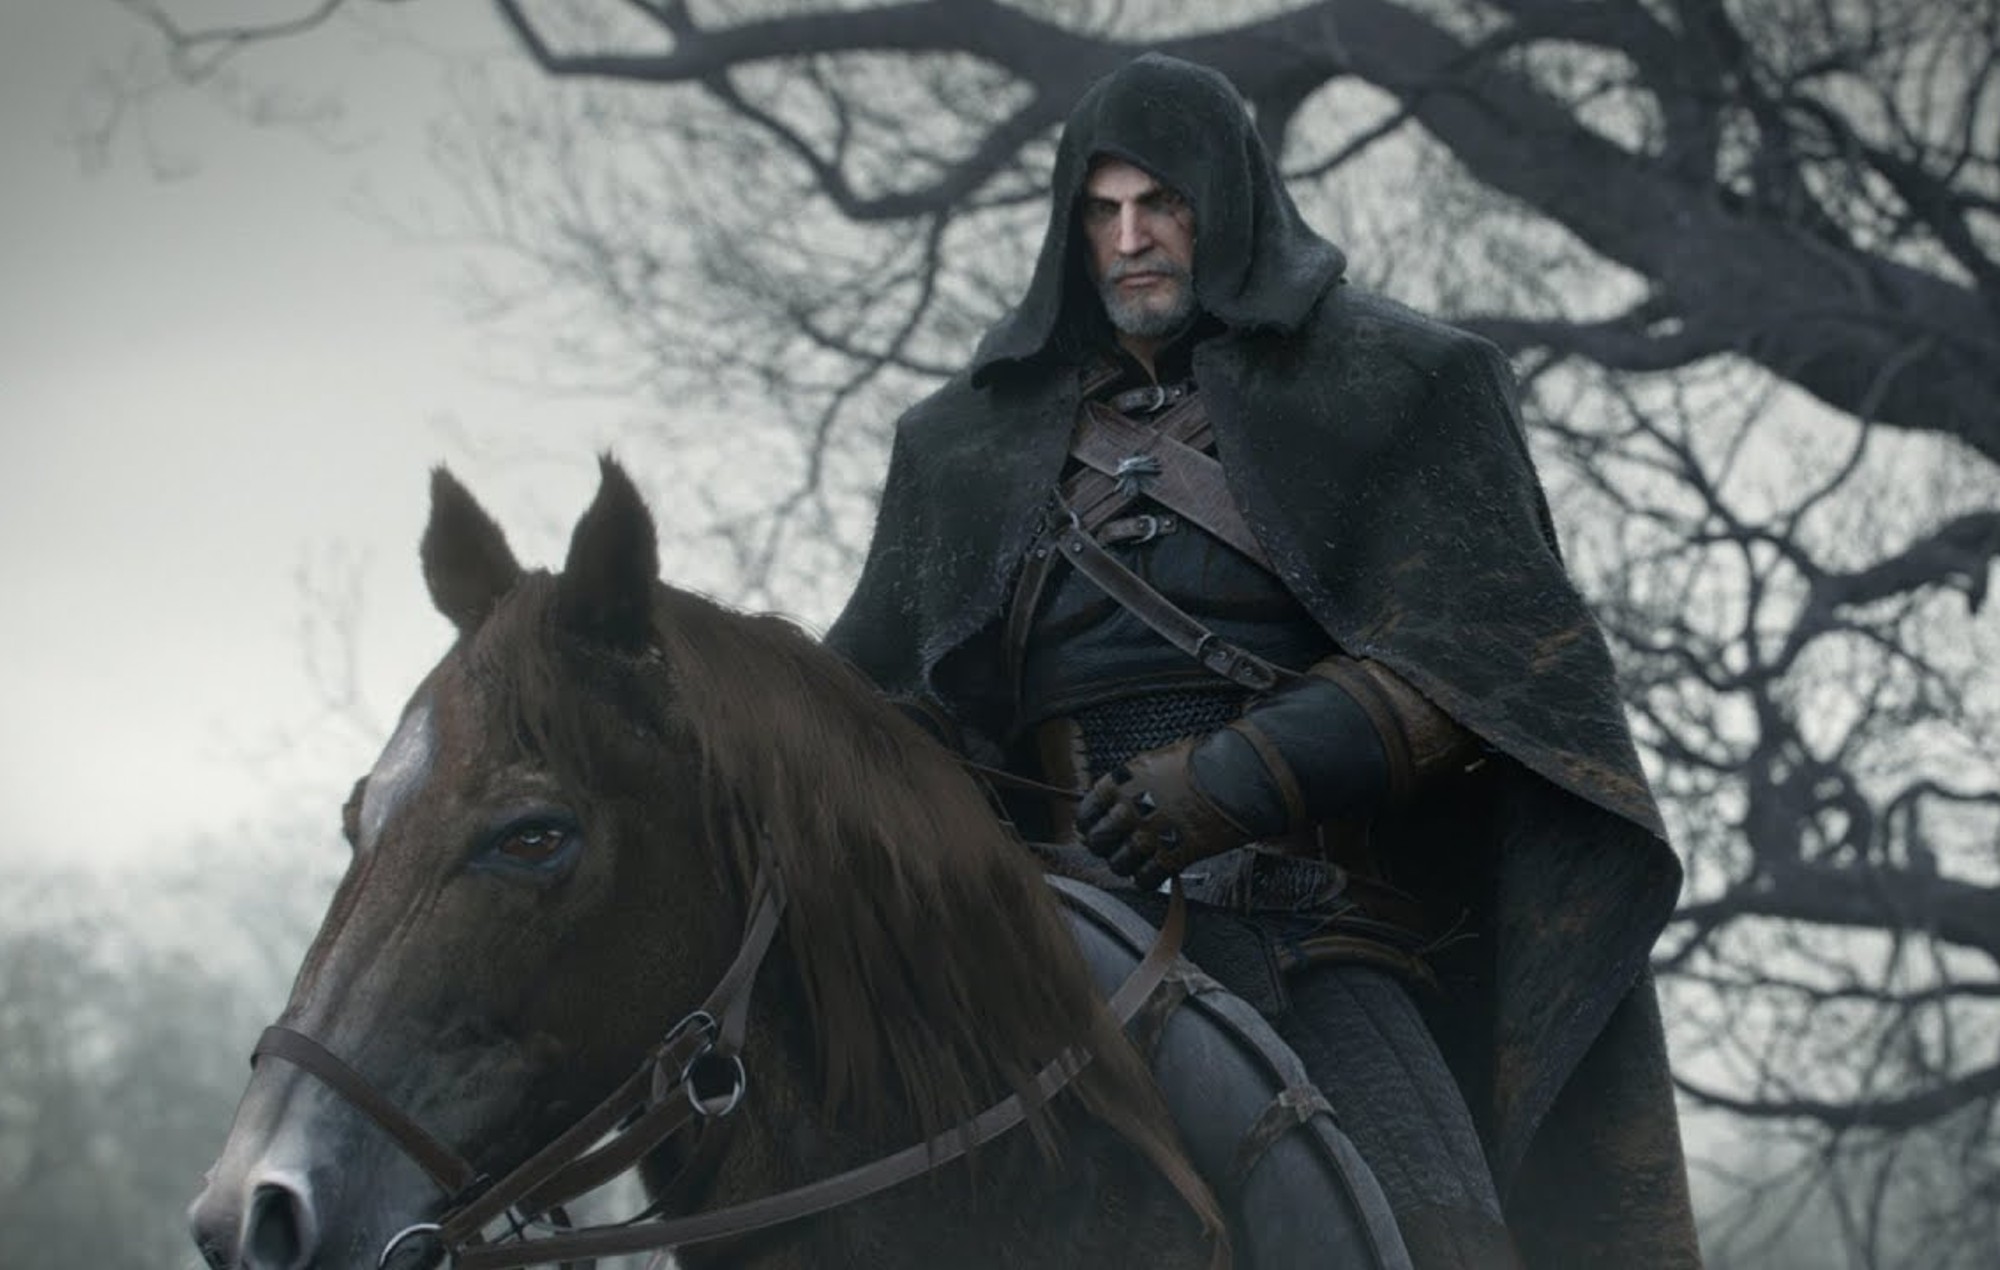 Una captura de pantalla del tráiler cinematográfico de The Witcher 3: Wild Hunt con Geralt de Rivia a caballo